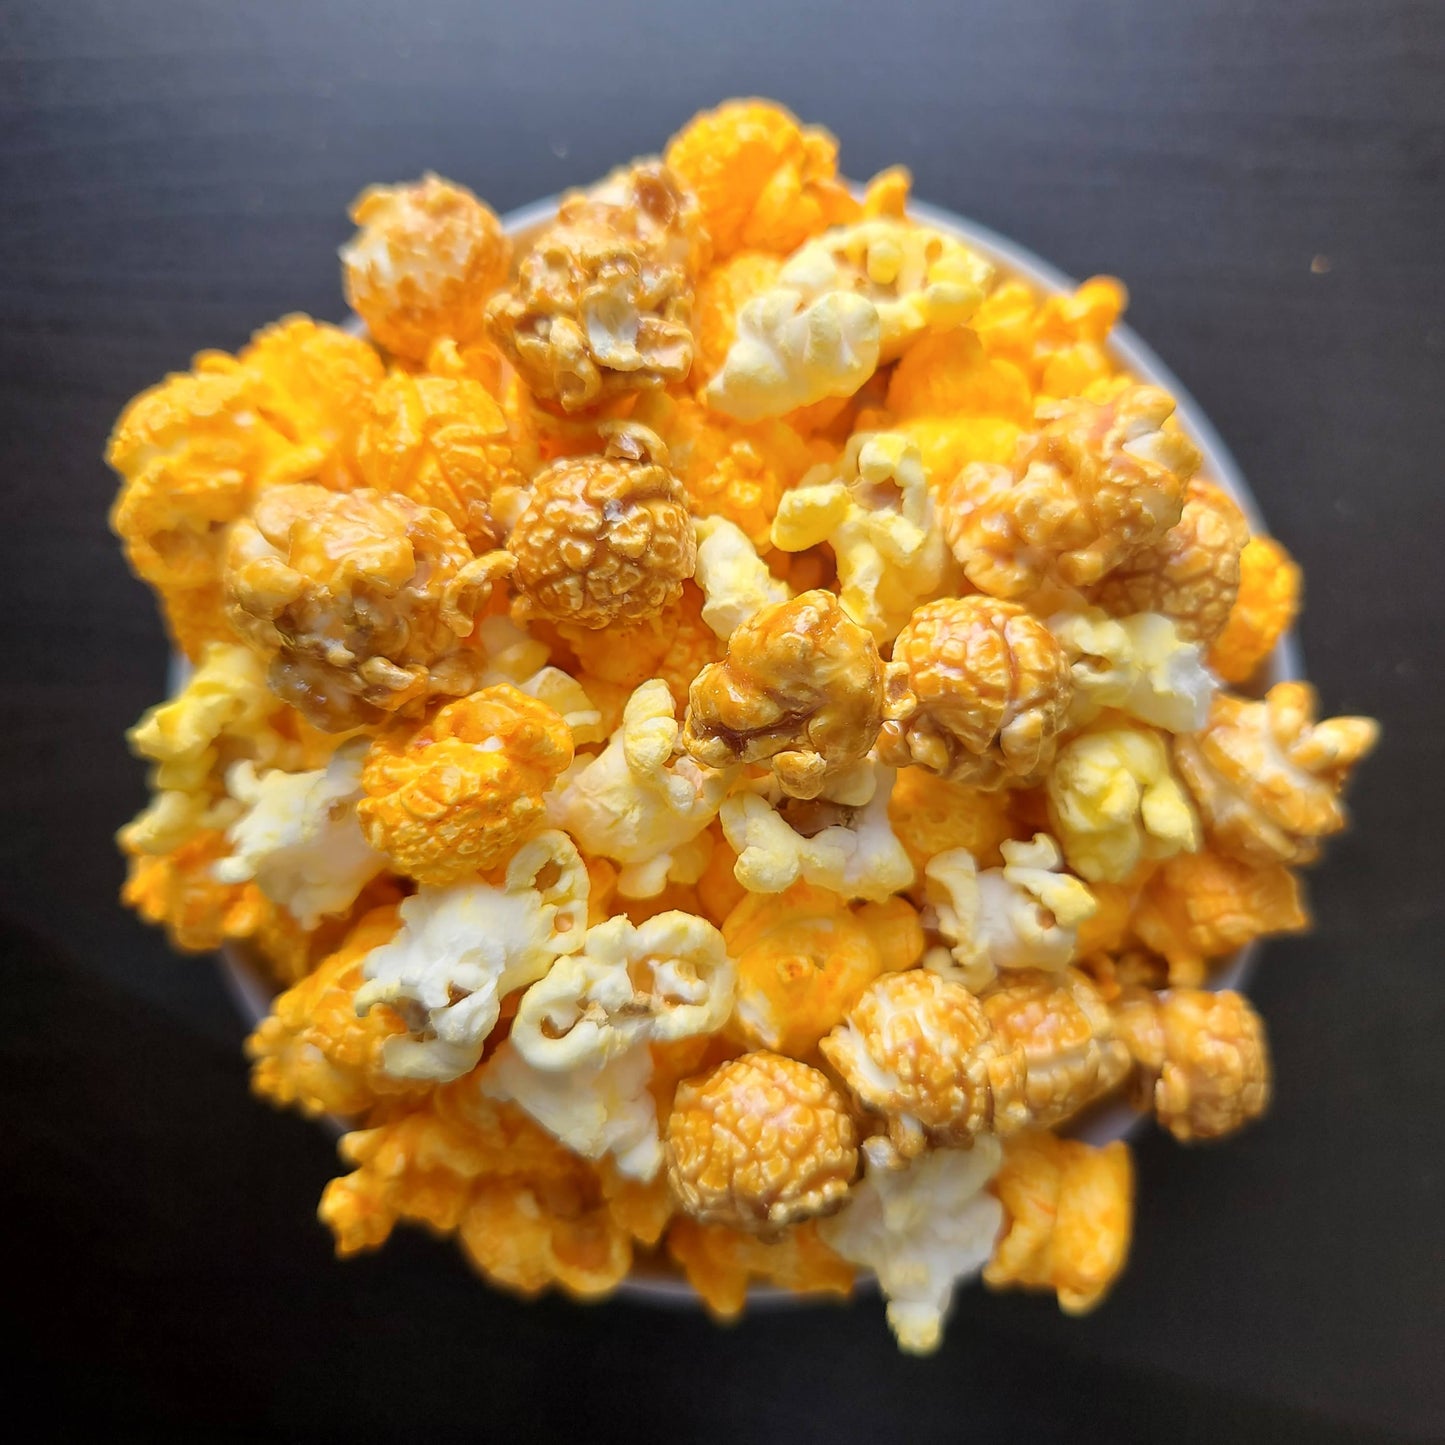 Perry PTO - Cravings Gourmet Popcorn